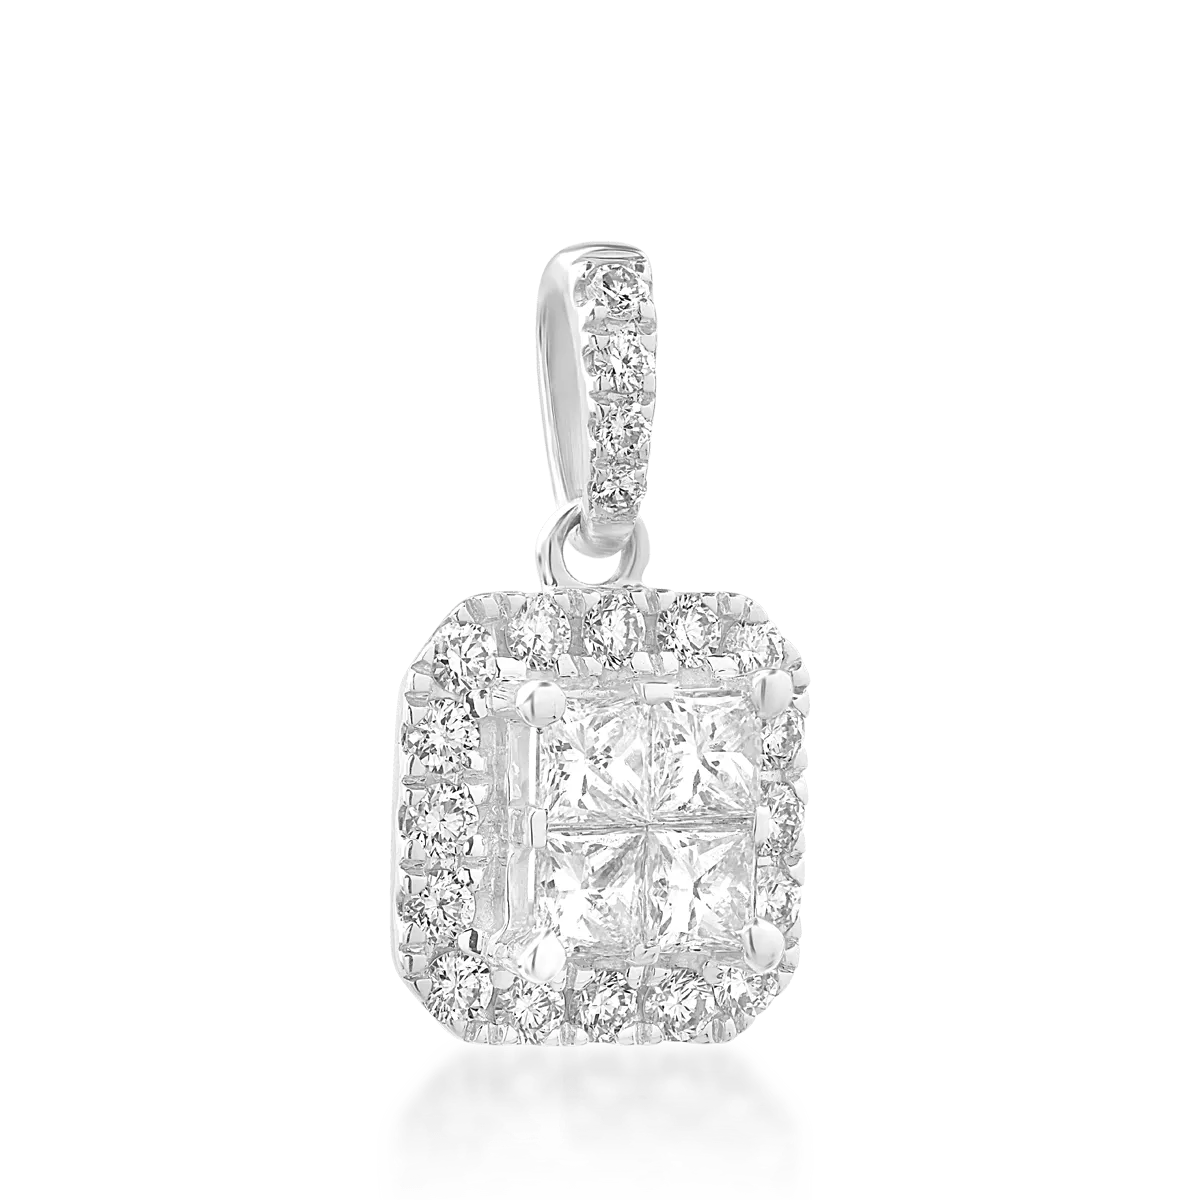 18K white gold pendant with 0.4ct diamonds